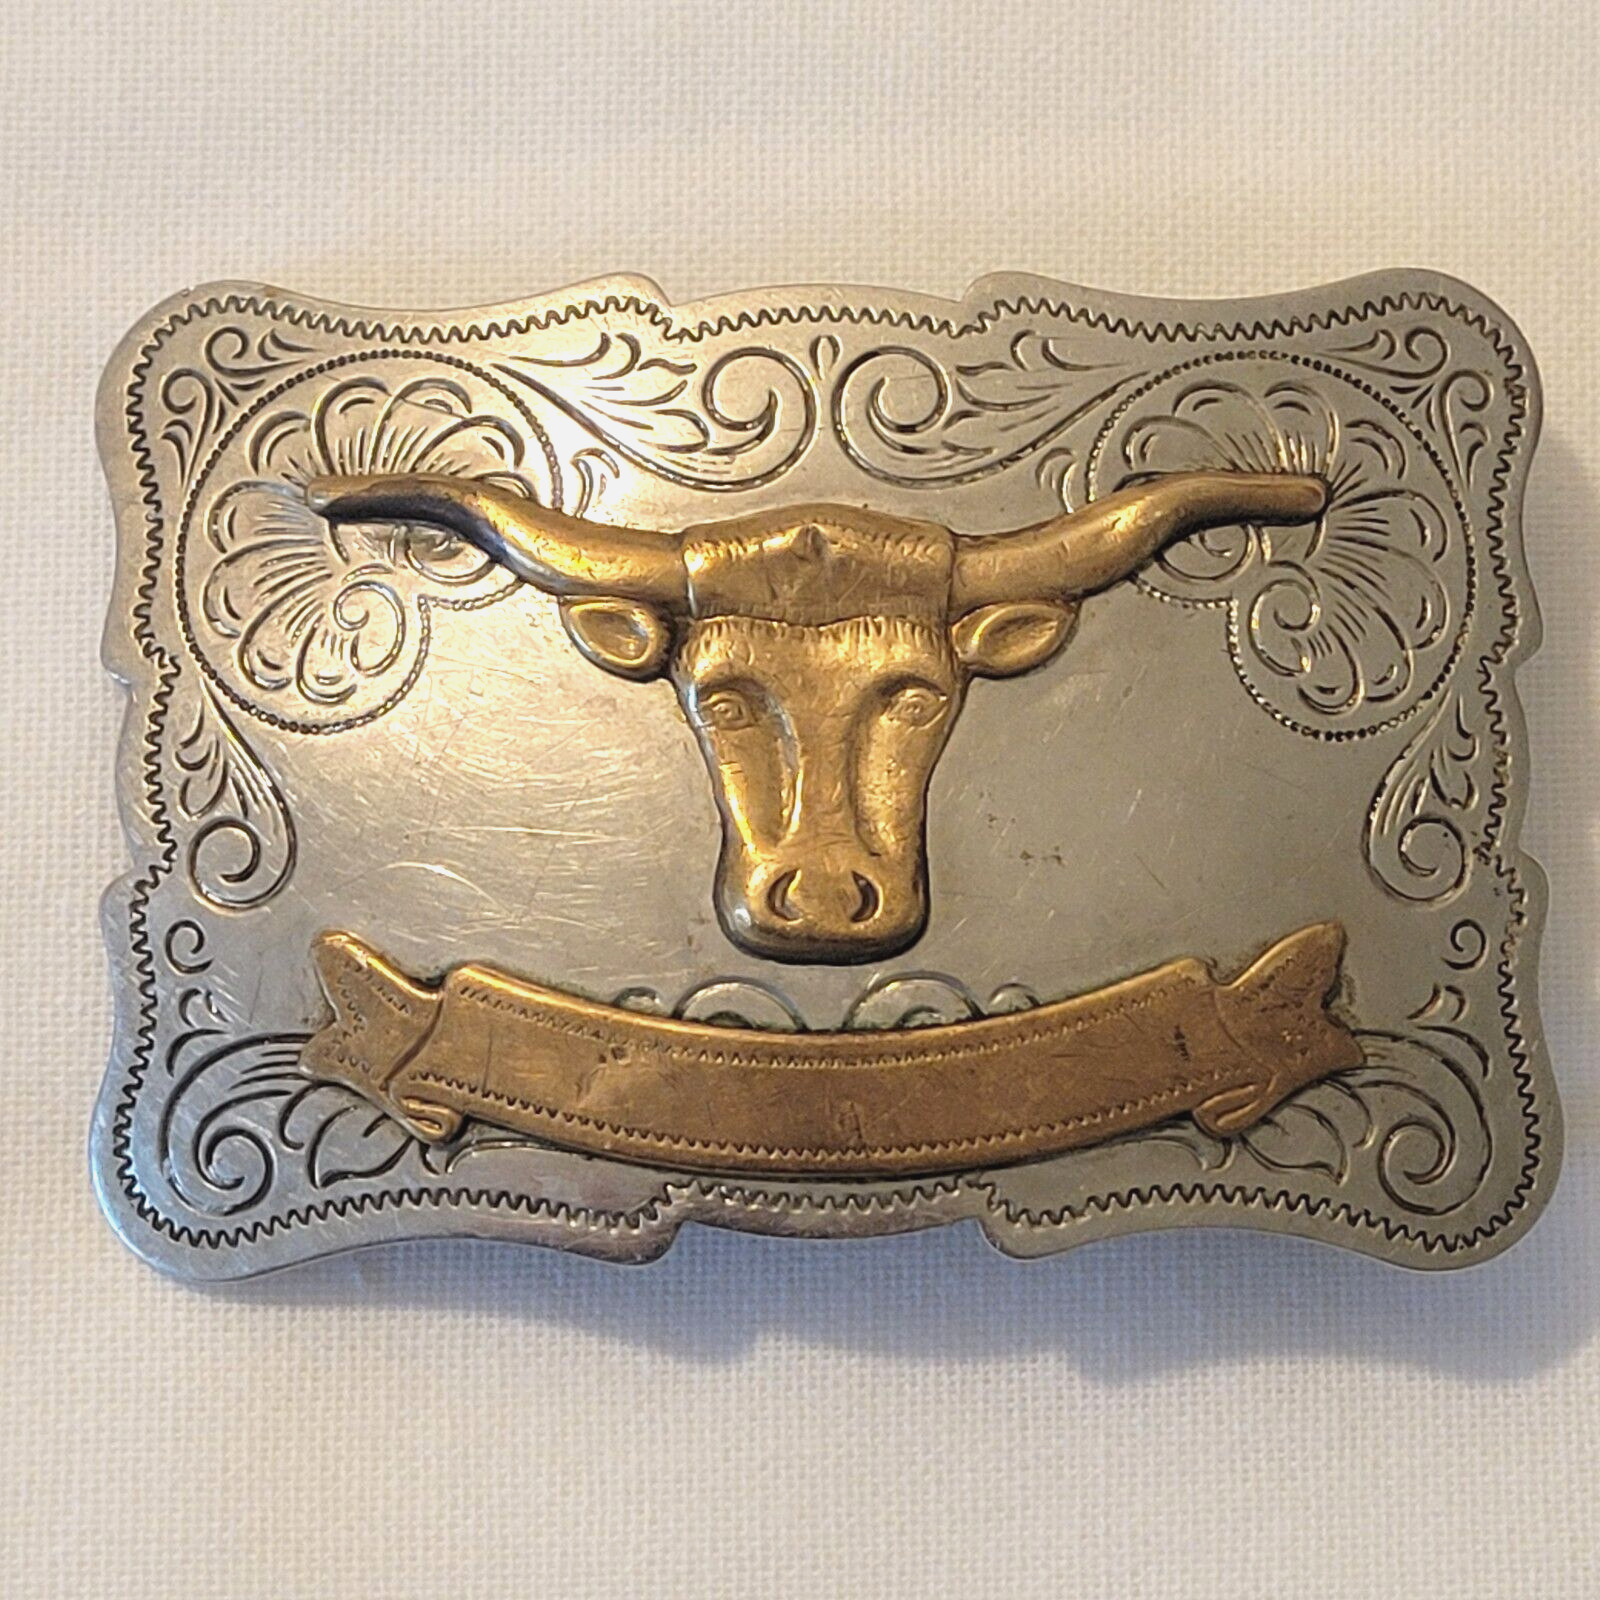 VTG Texas Longhorn Belt Buckle Western 2 Tone Handmade Engraved Design